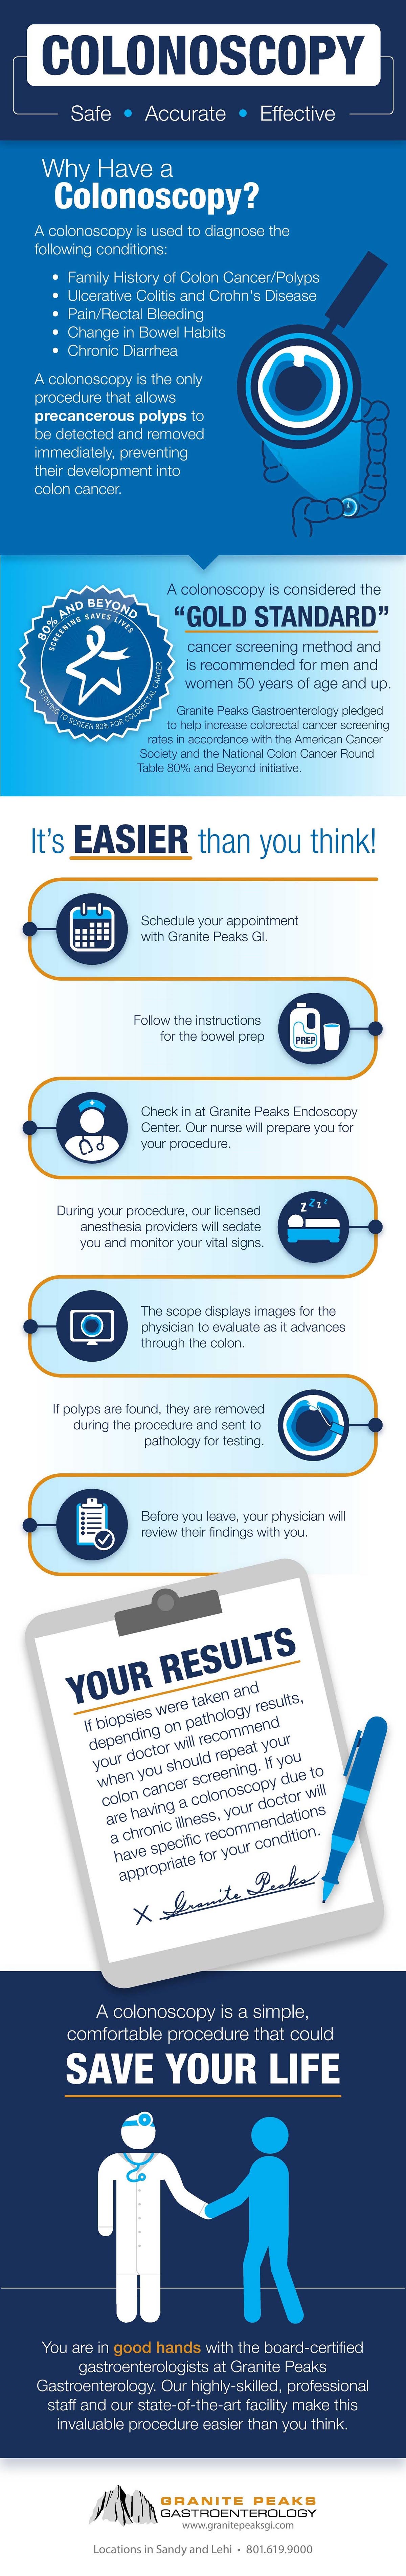 Colonoscopy Procedure Description #infographic